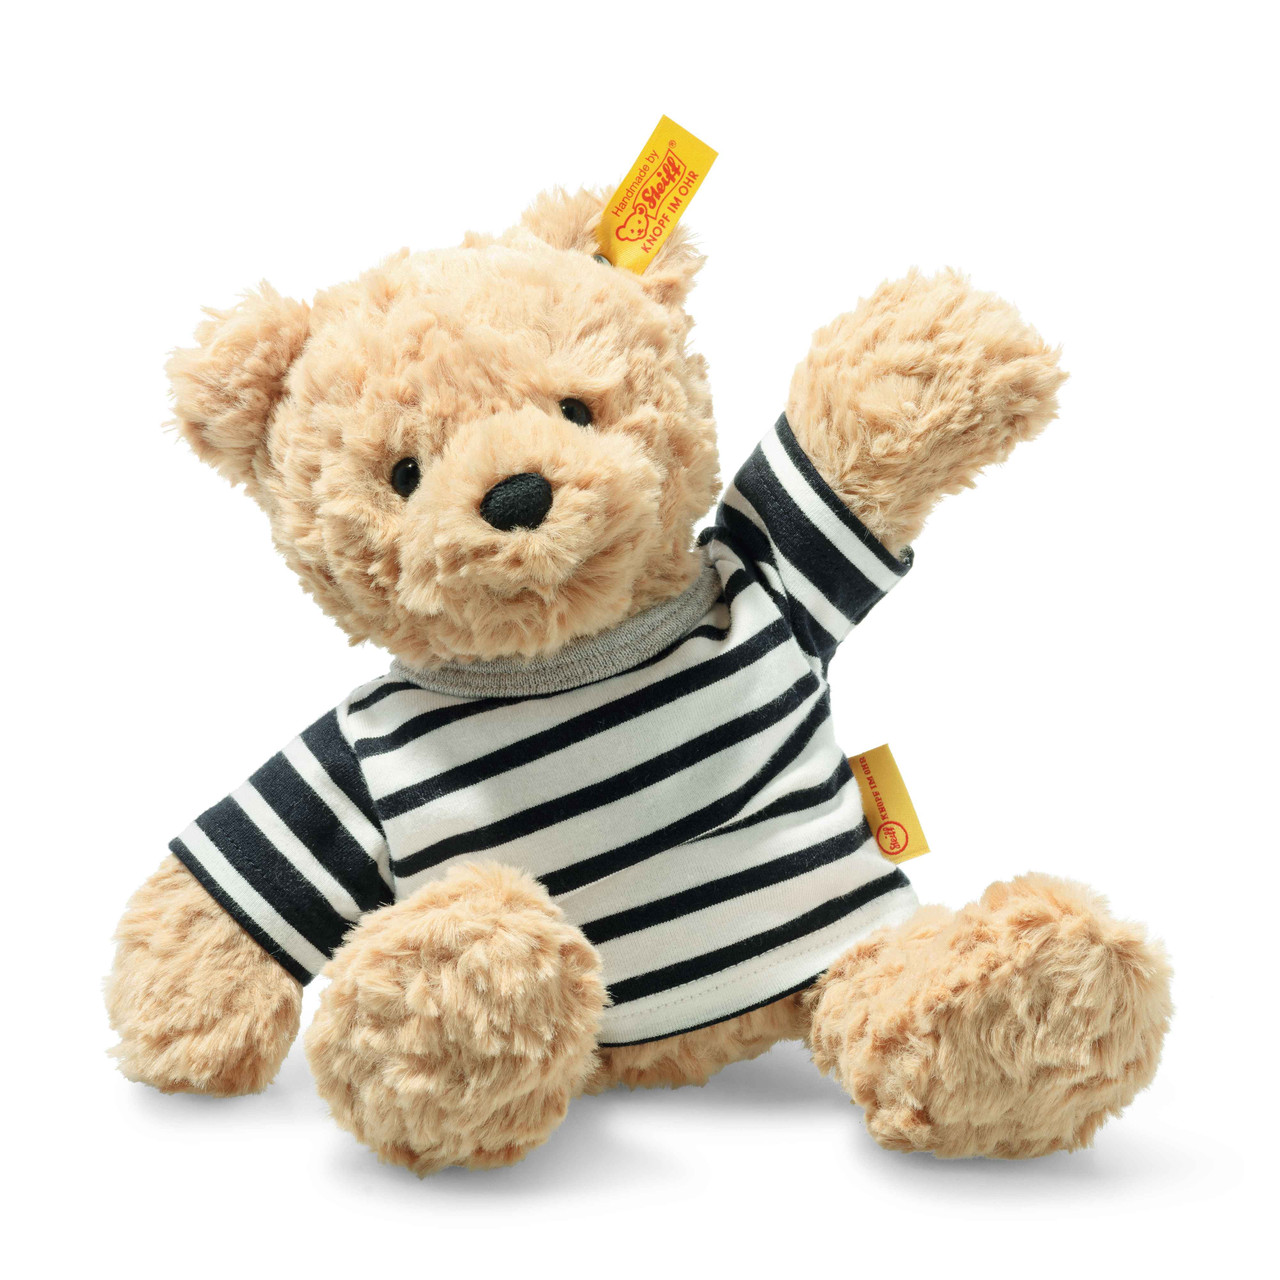 Steiff Stuffed Animal Bears: Kids, Babies, Collectibles, More